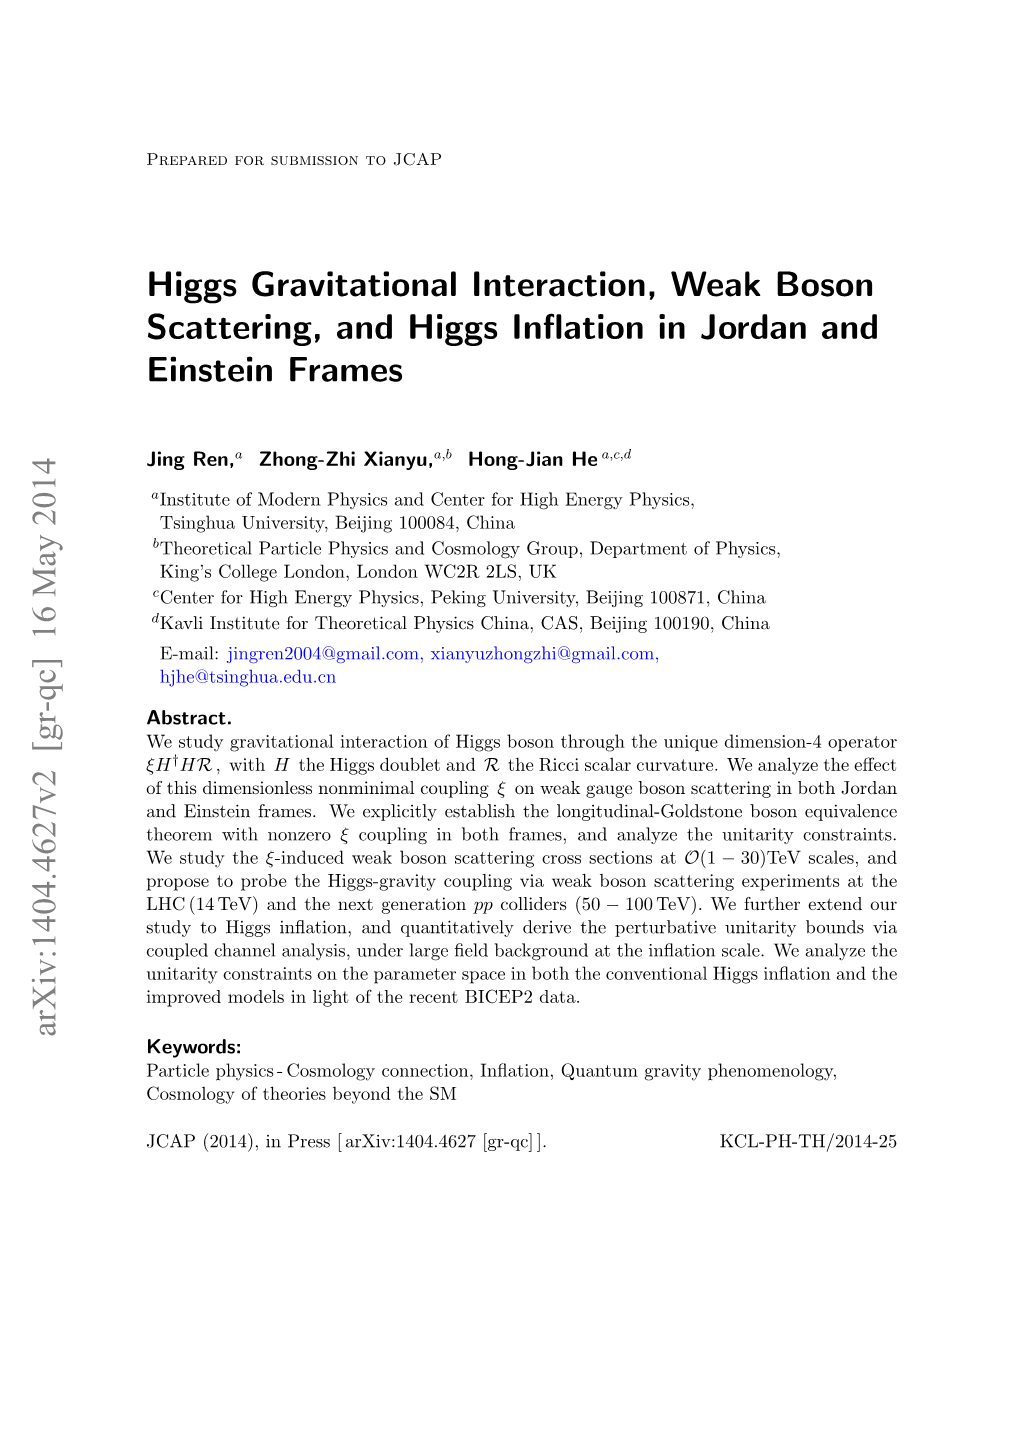 Higgs Gravitational Interaction, Weak Boson Scattering, and Higgs Inﬂation in Jordan and Einstein Frames